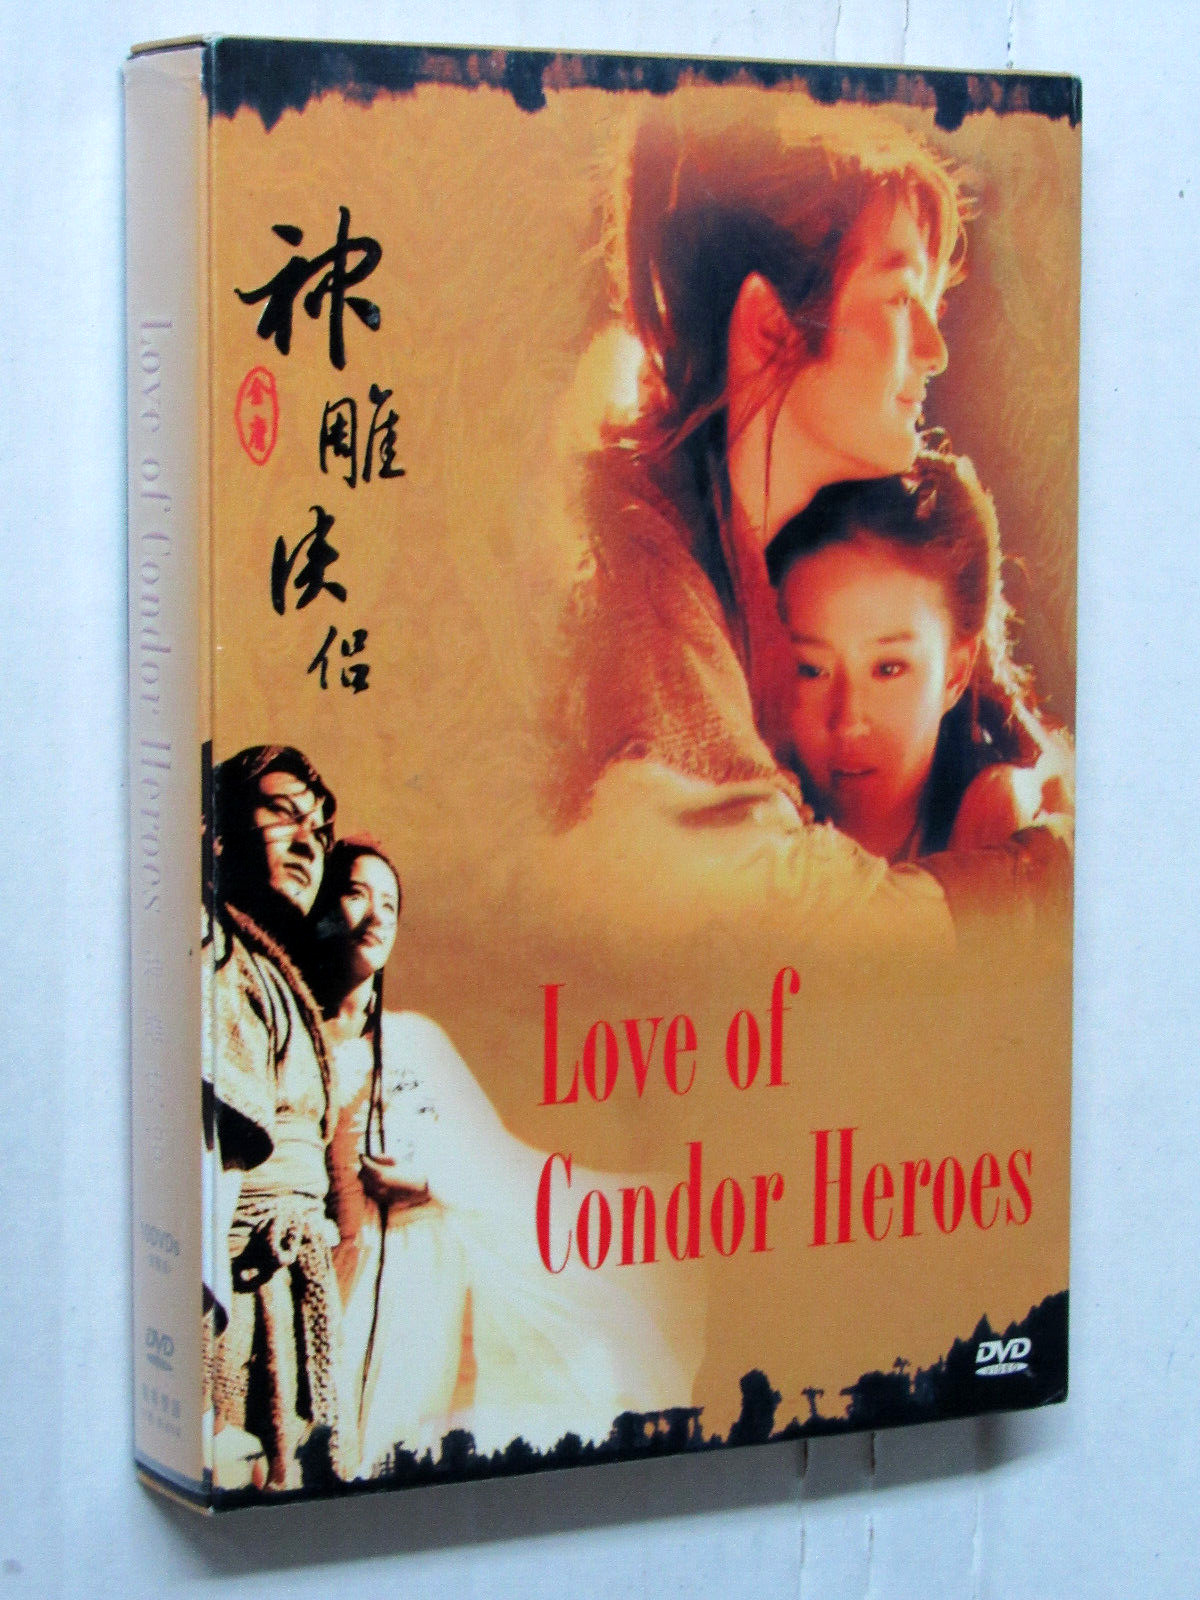 LOVE OF CONDOR HEROES 2008 (DVD BOX SET) HK TV SHOW, CNINESE, LIKE-NEW, REGION 1